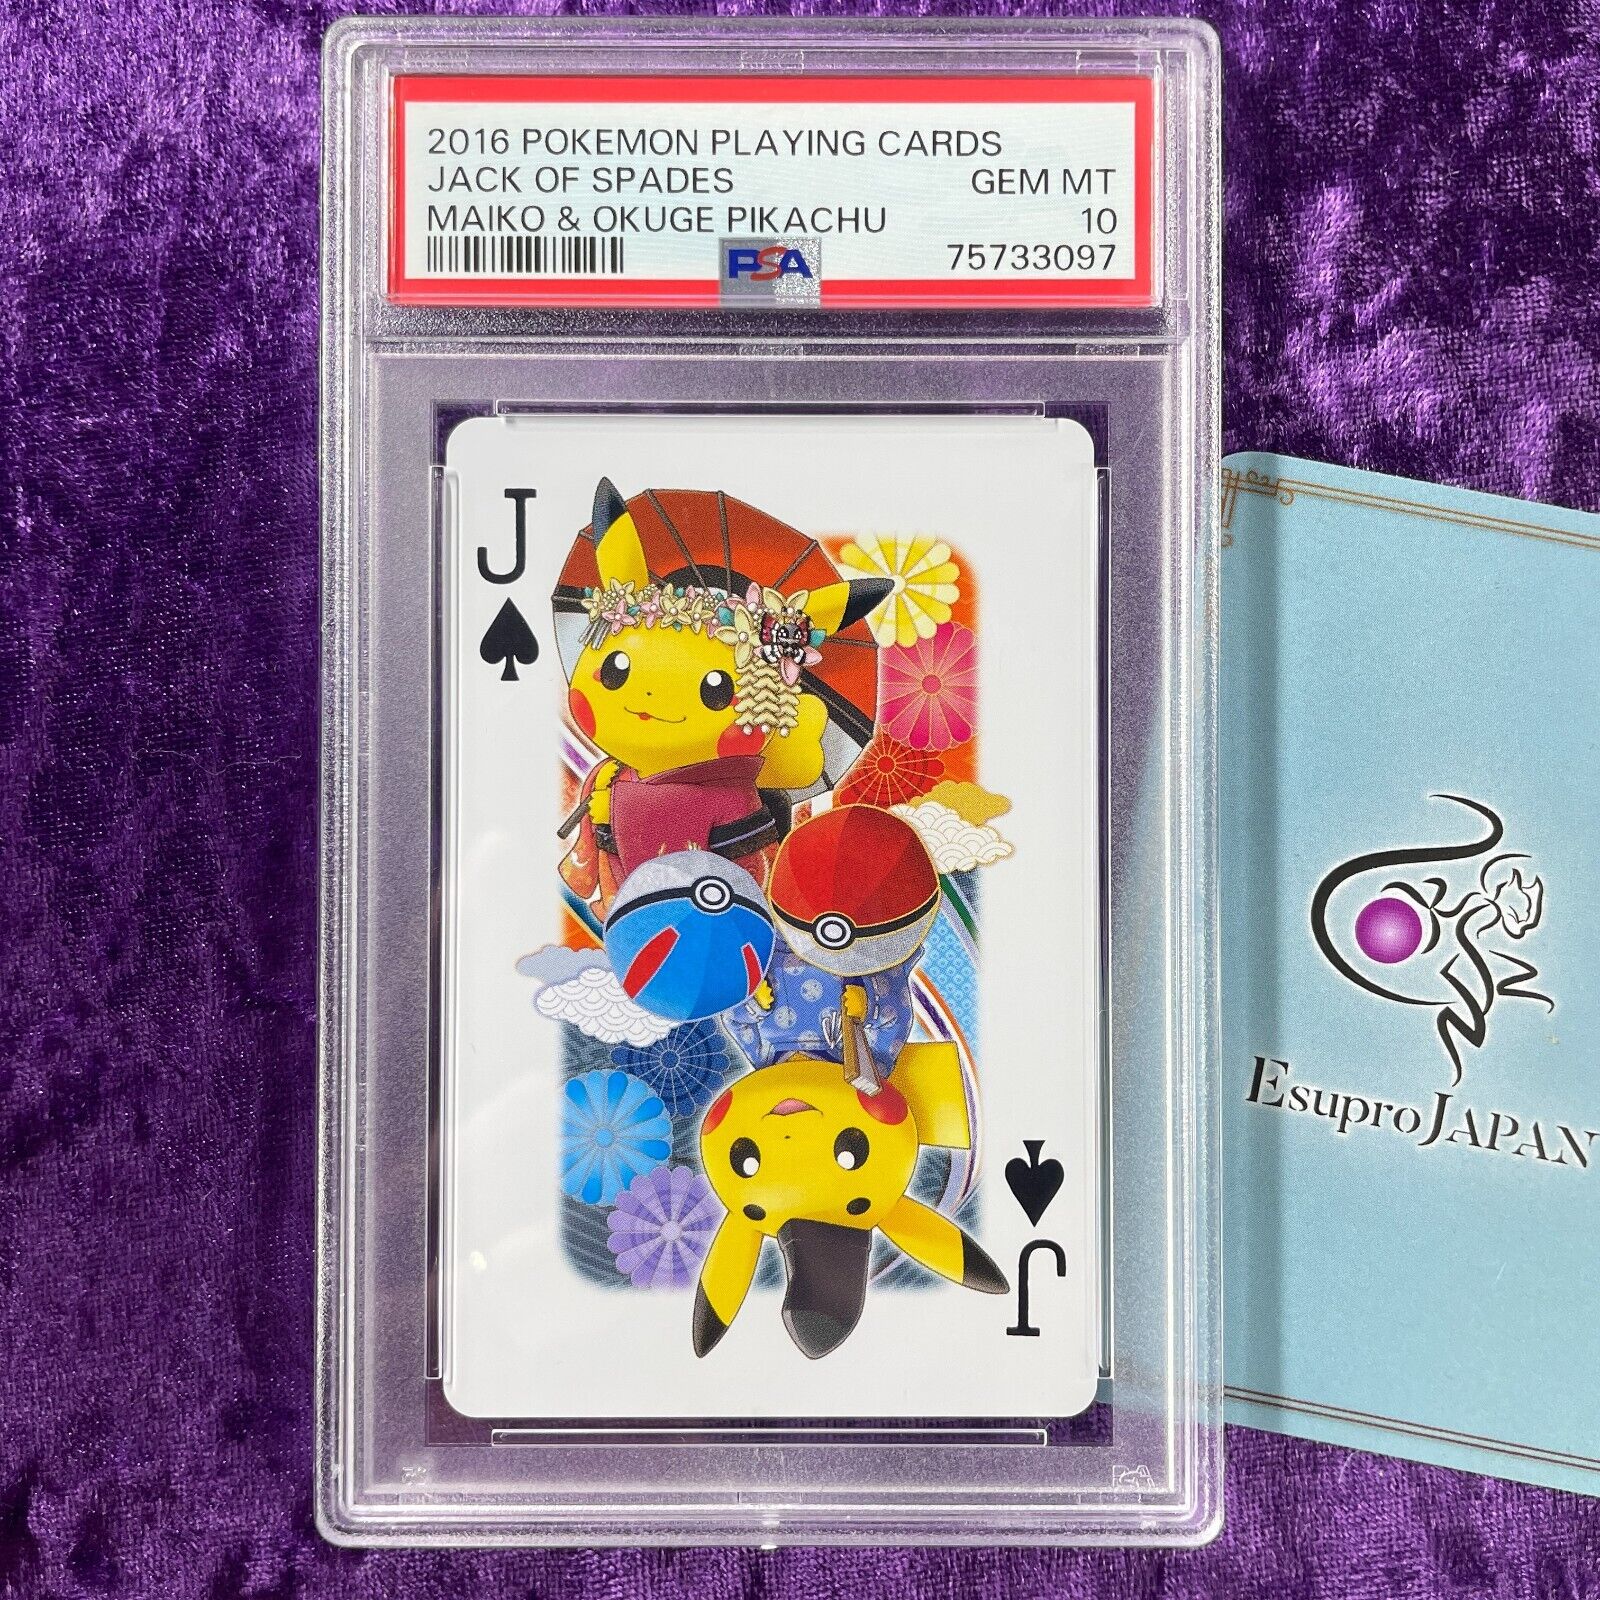 PSA 10 2016 Pokemon Playing Cards Maiko Pikachu & Okuge Pikachu Jack Of Spades